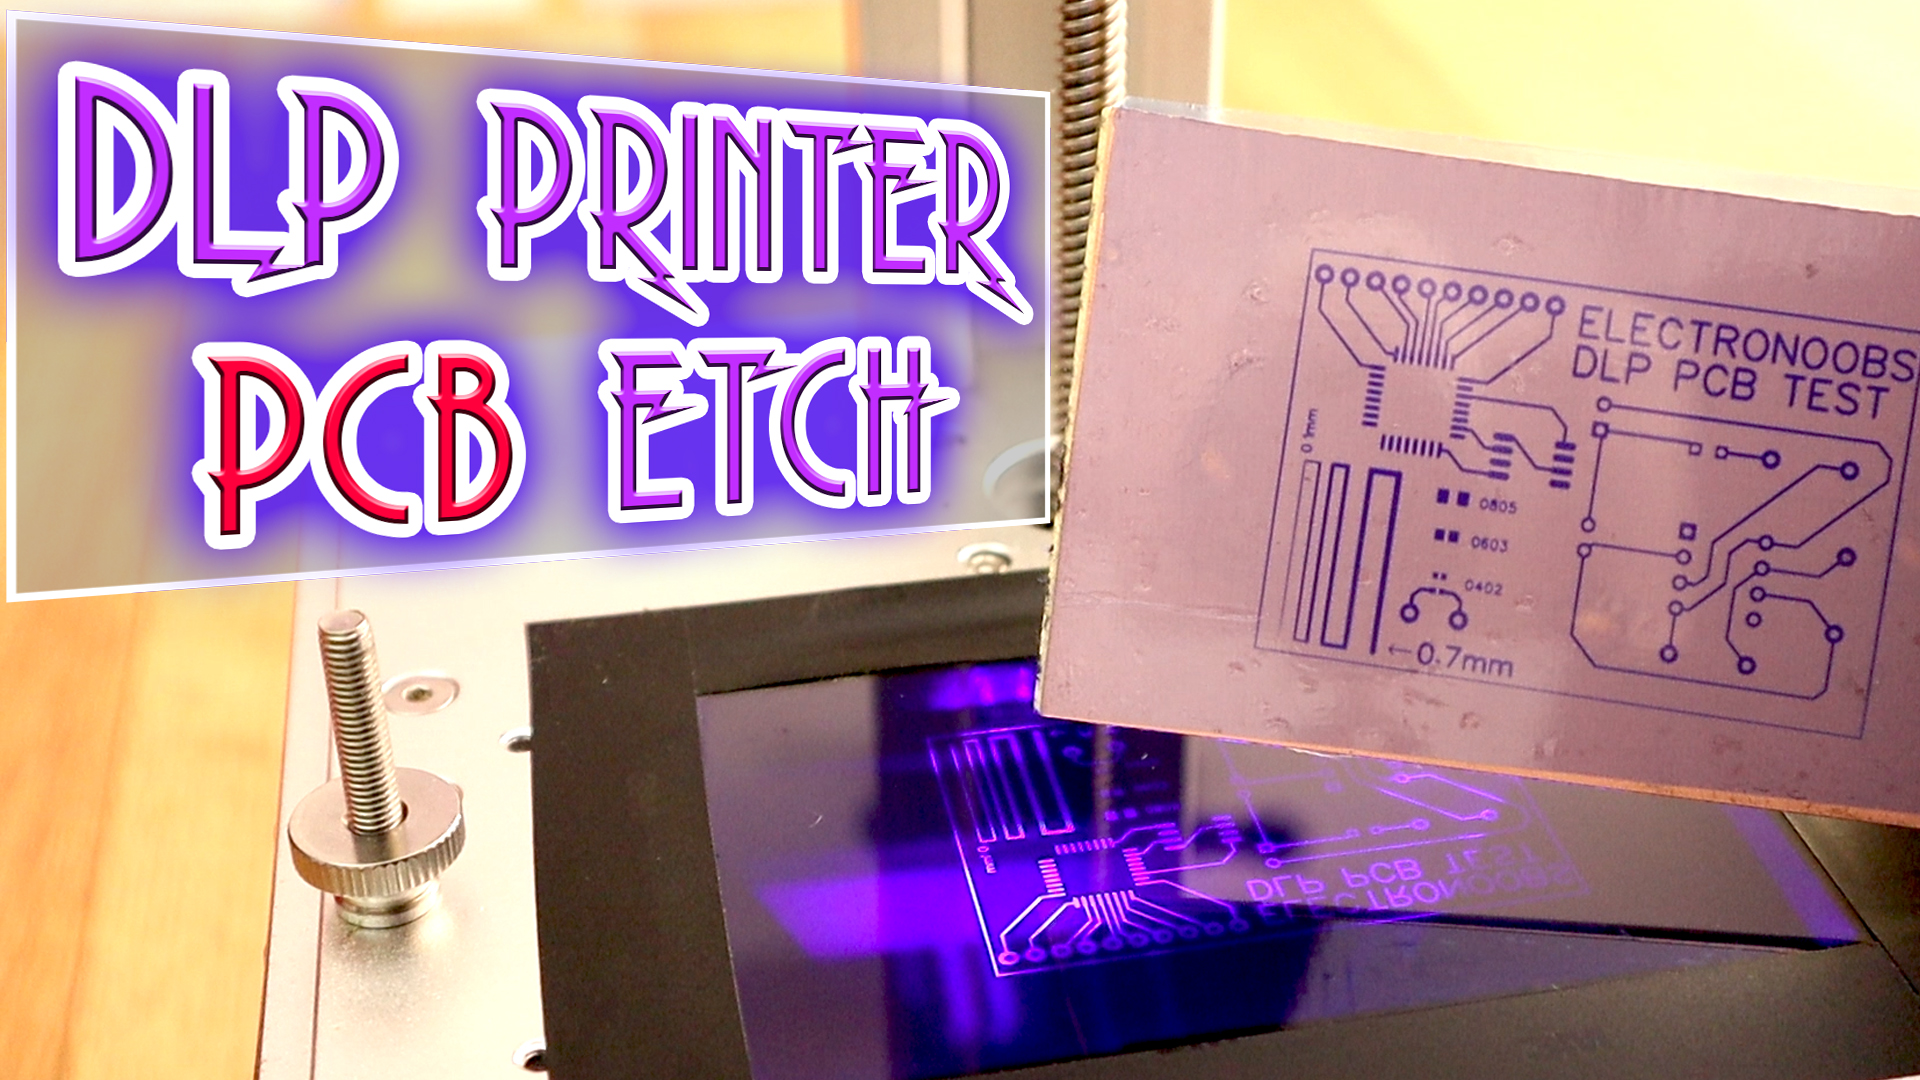 DLP 3D printer PCB etch